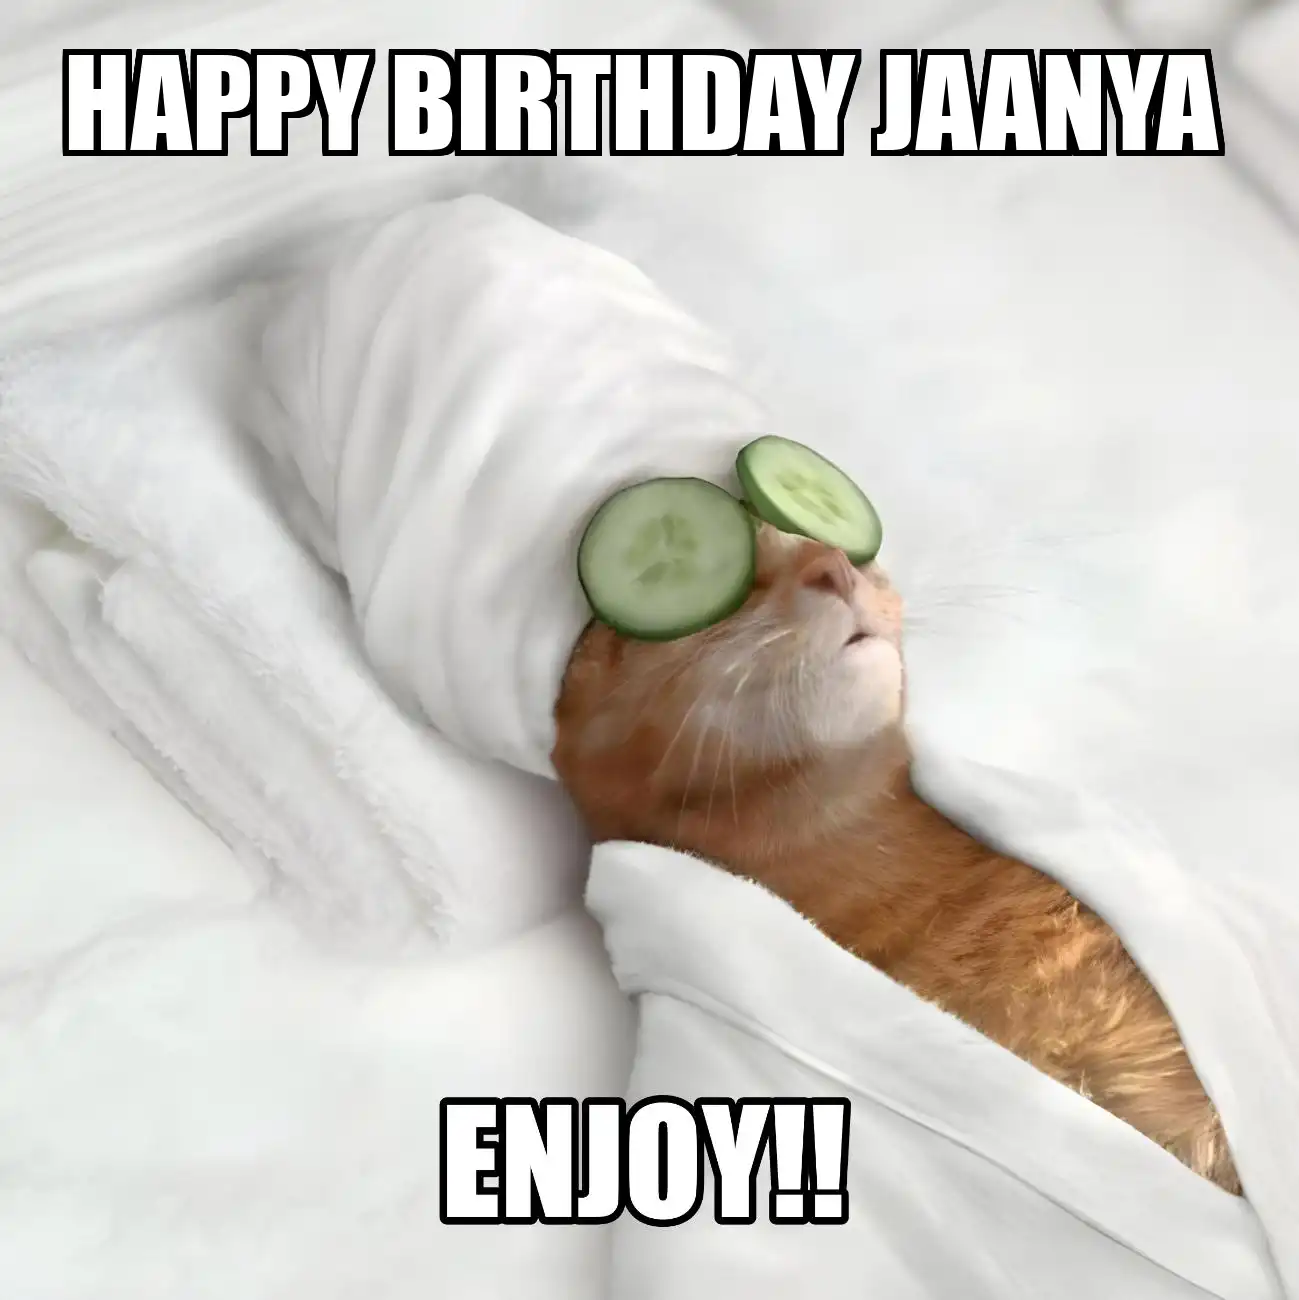 Happy Birthday Jaanya Enjoy Cat Meme